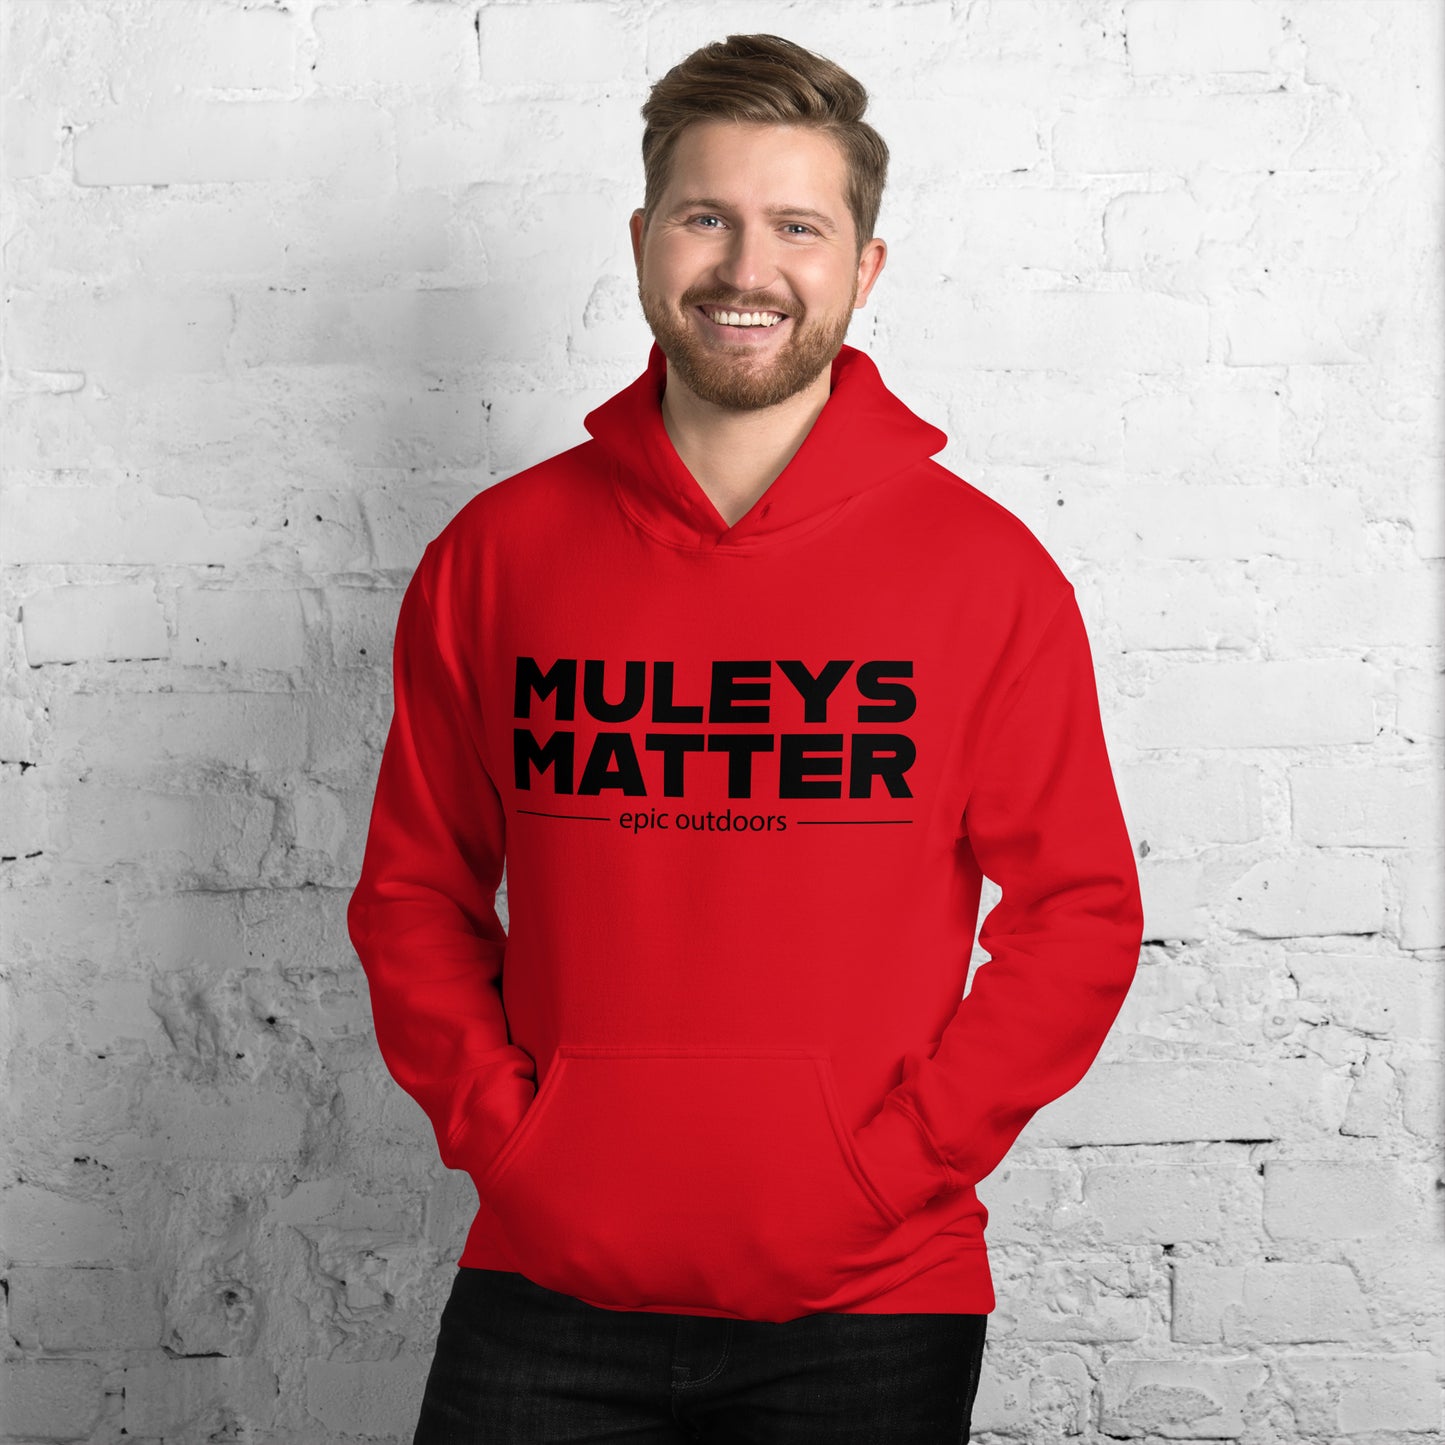 Muleys Matter Light Logo Unisex Hoodie - Cotton-Poly Blend 18500